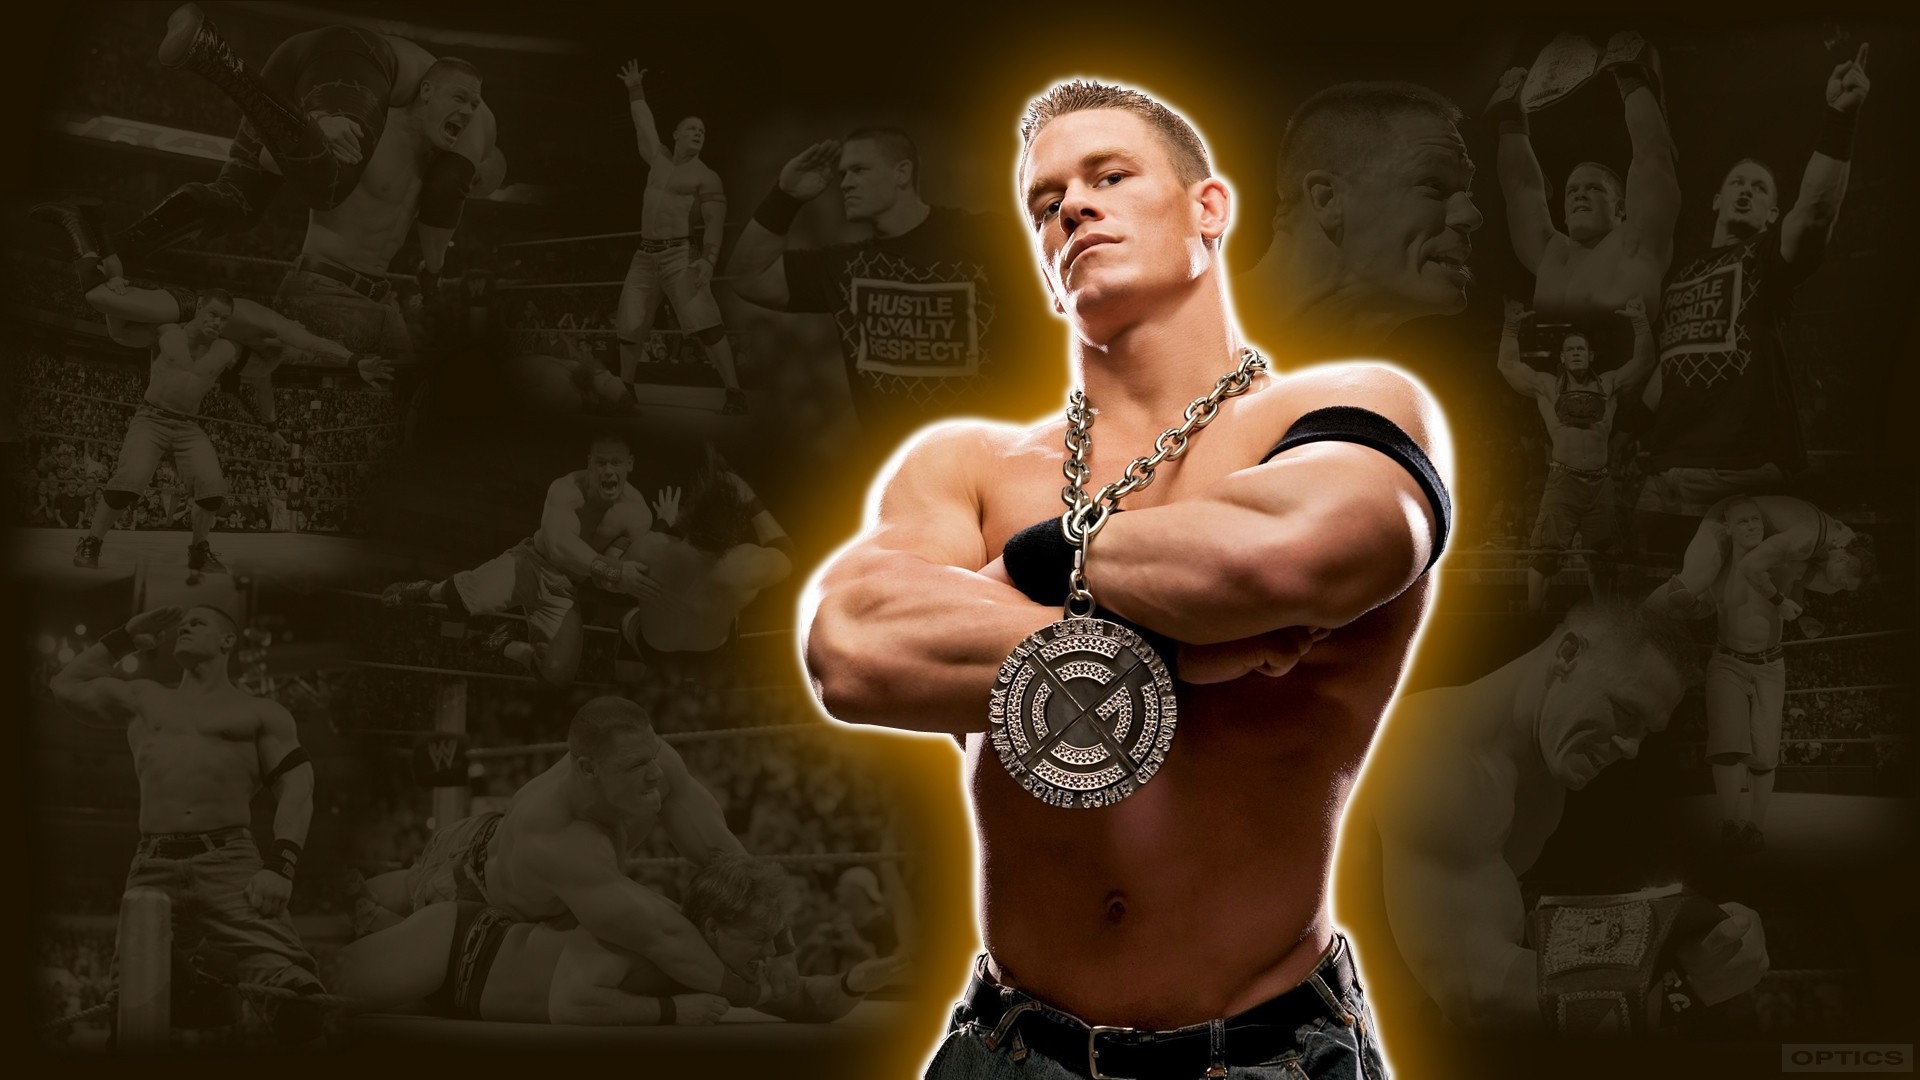 1920x1080 Top WWE Wrestler John Cena Full Hd Wallpaper Photos & Images.